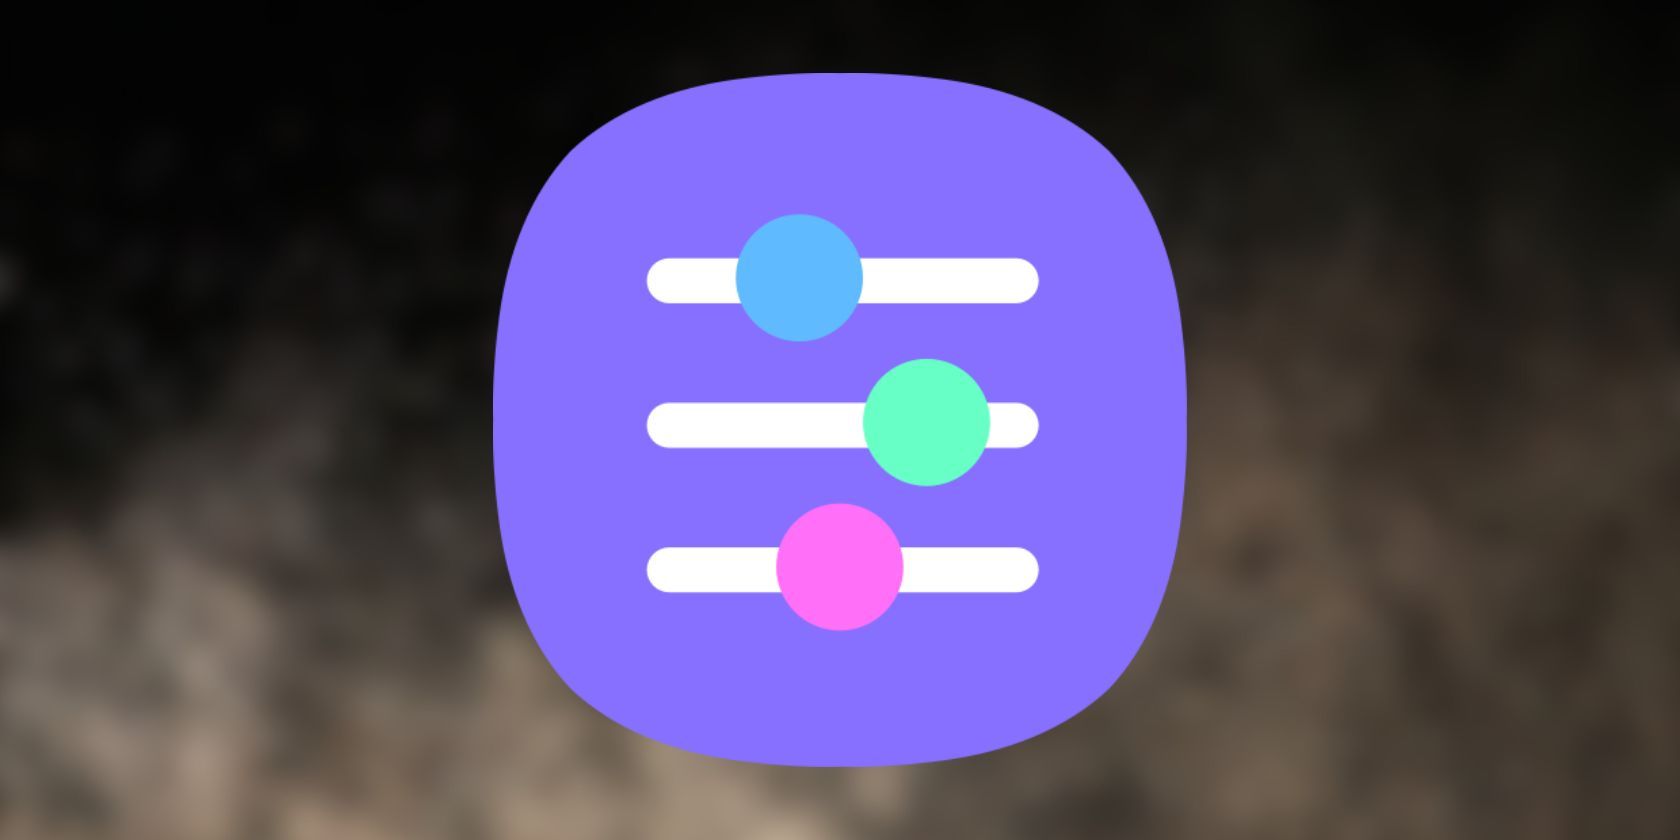 Sound Assistant app logo on a dark background